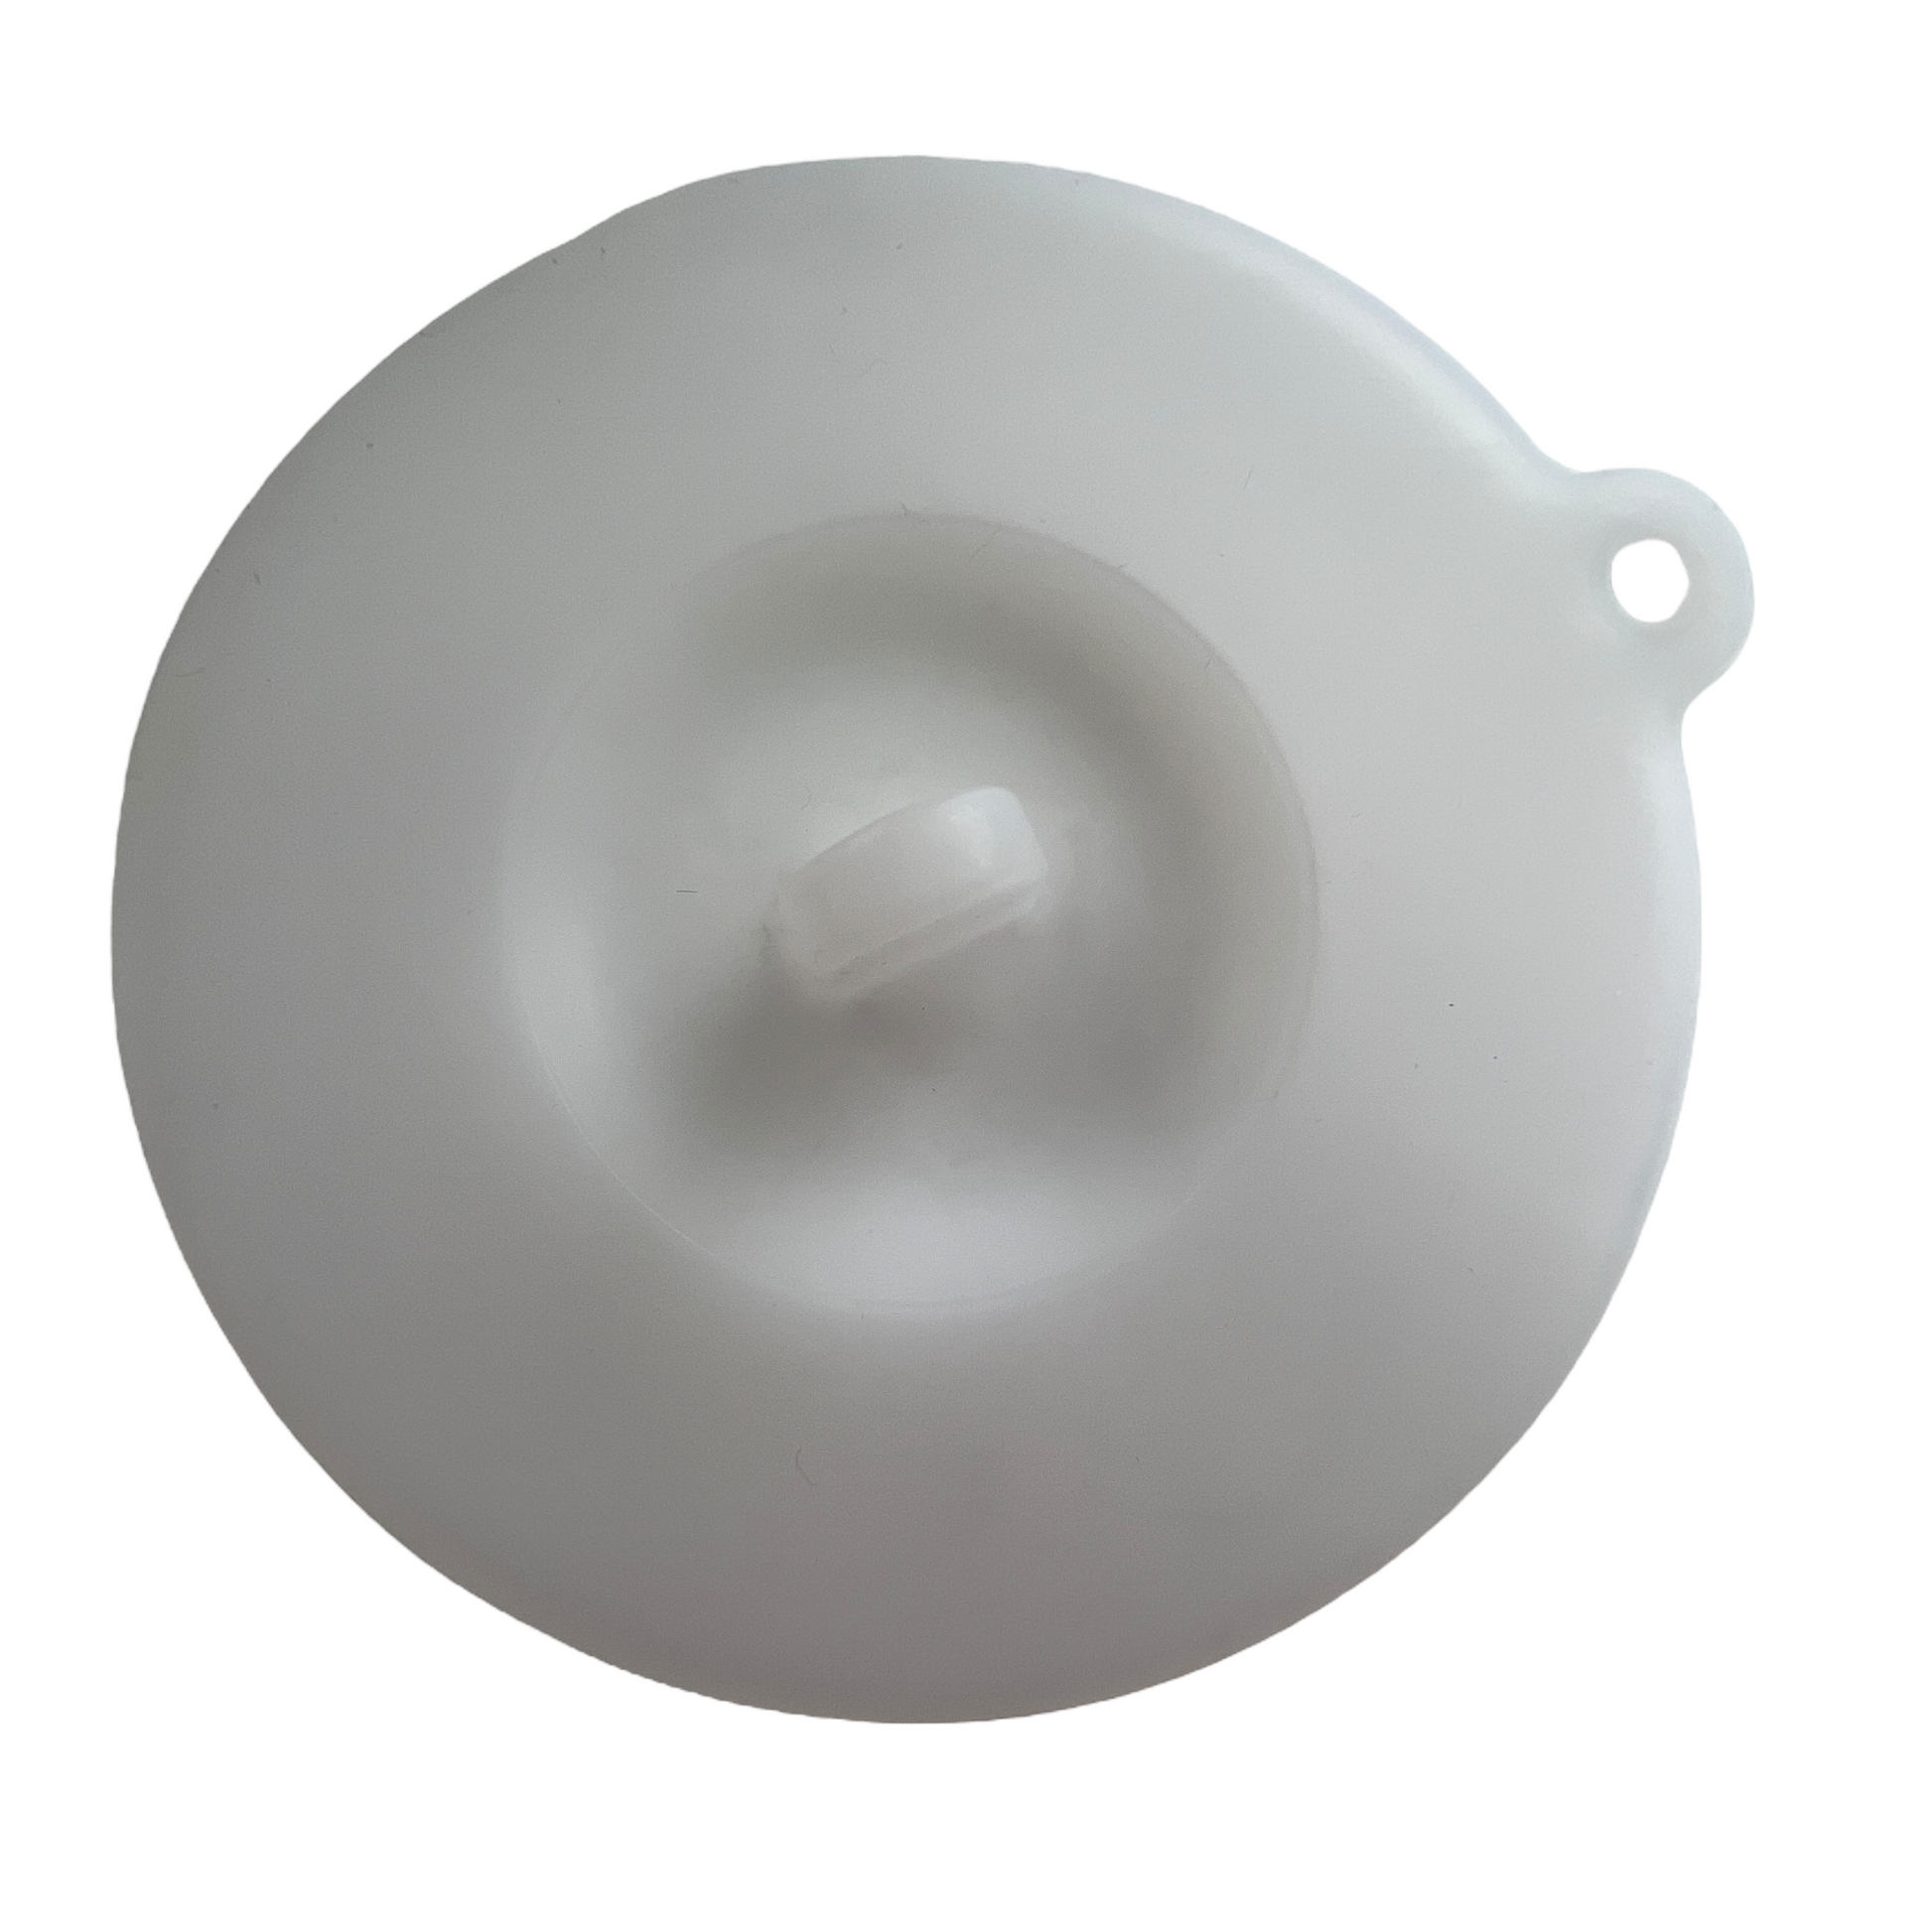 Silicone Bowl Cover  (3 Piece, multi size)  SPIRIT SPARKPLUGS   